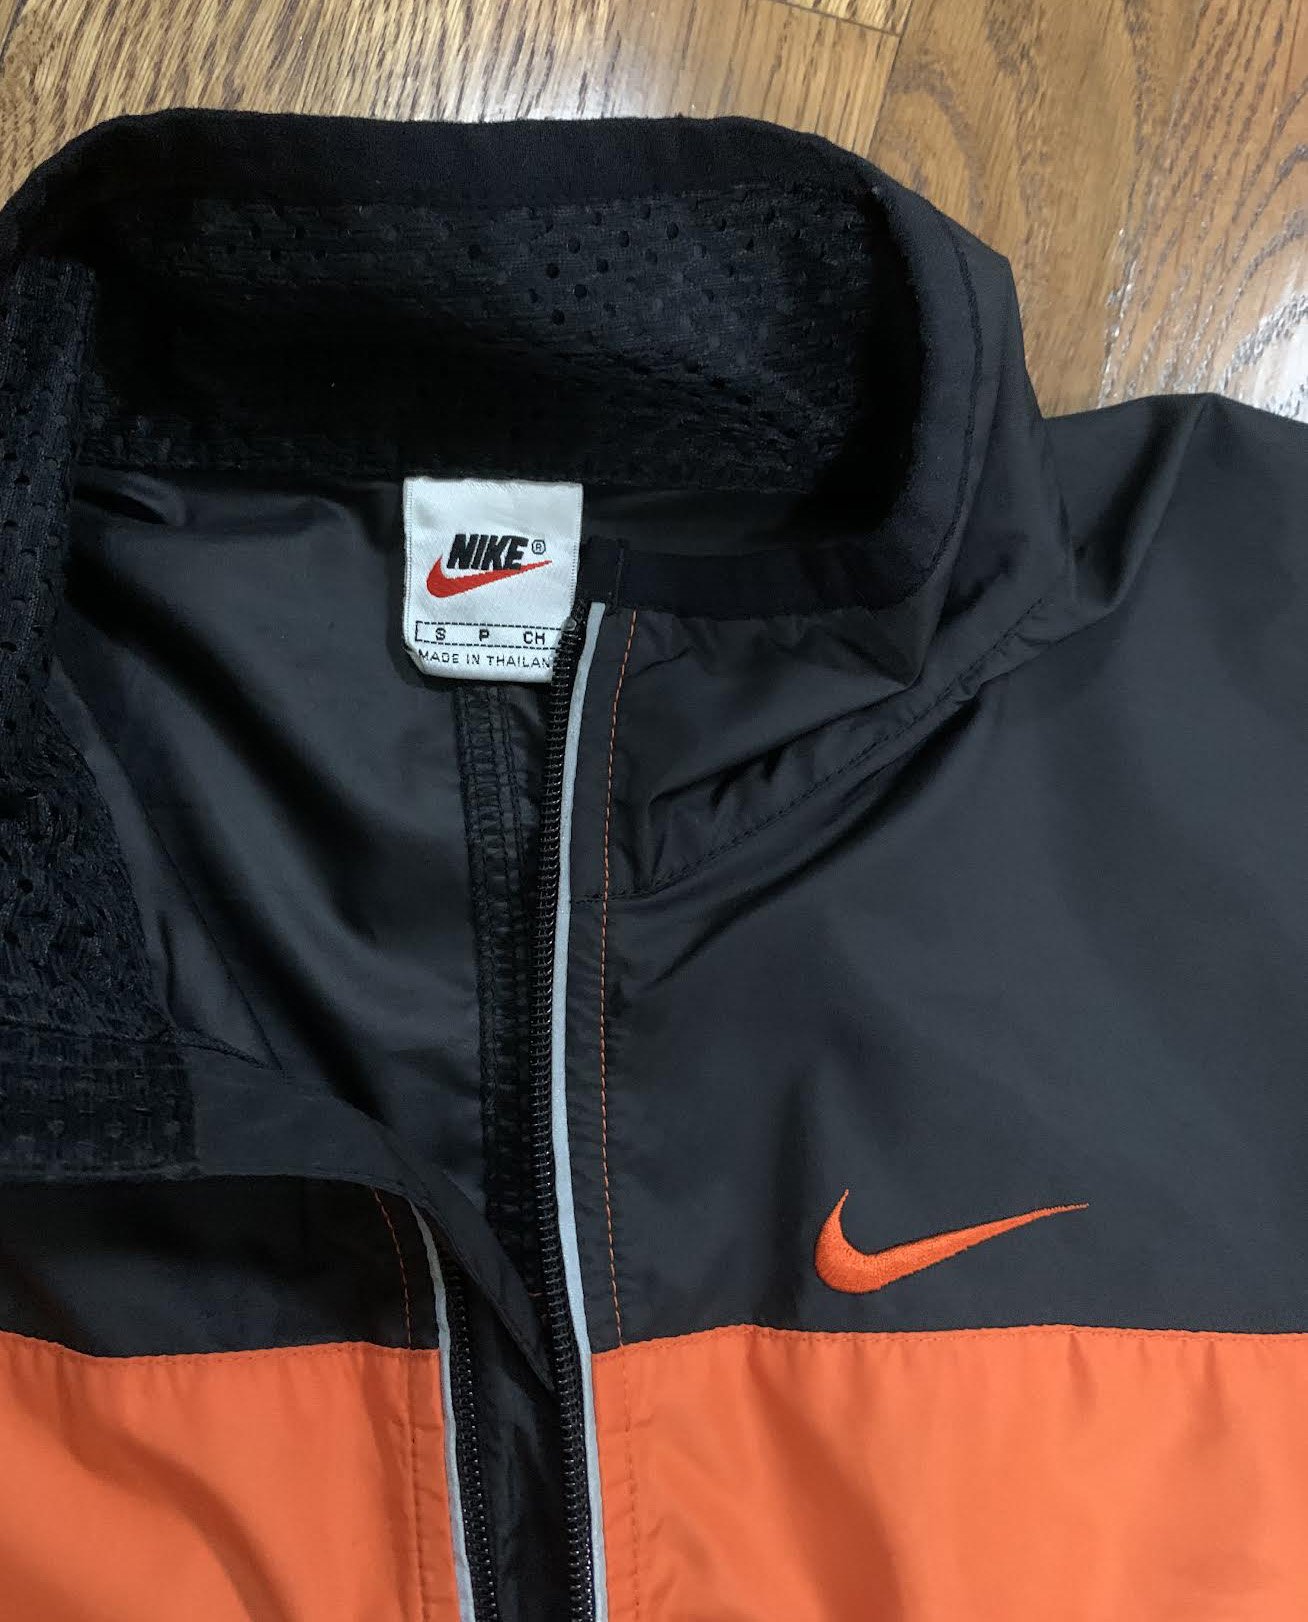 00s Nike Clima-Fit “ZIZO” Shell Jacket